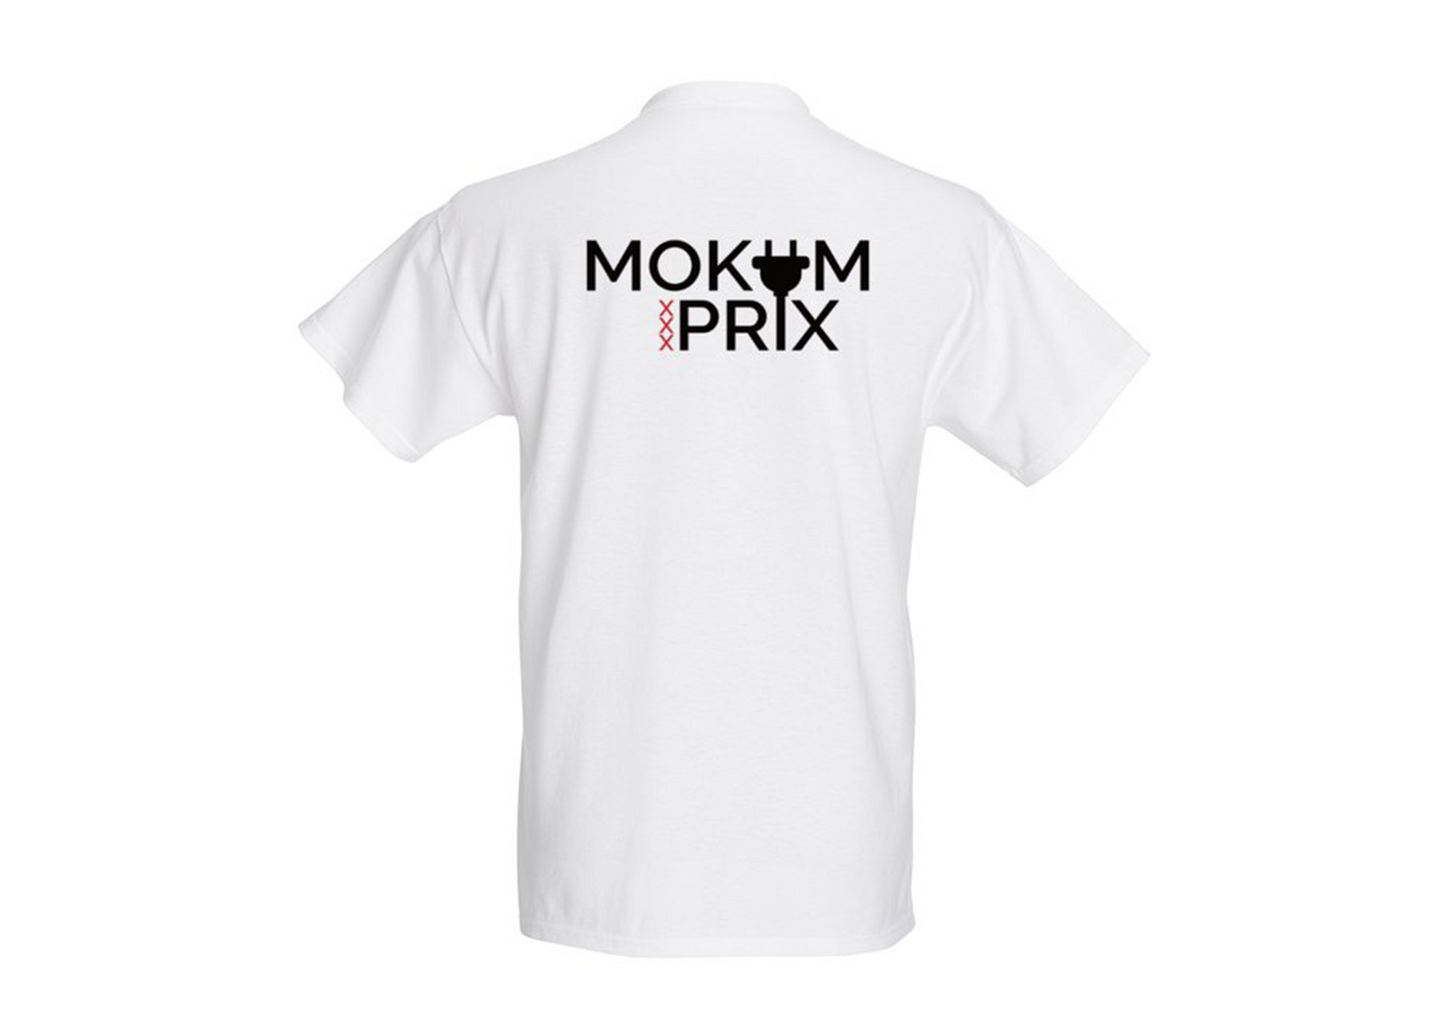 Mokum Prix 'Graduation Bear' T-shirt